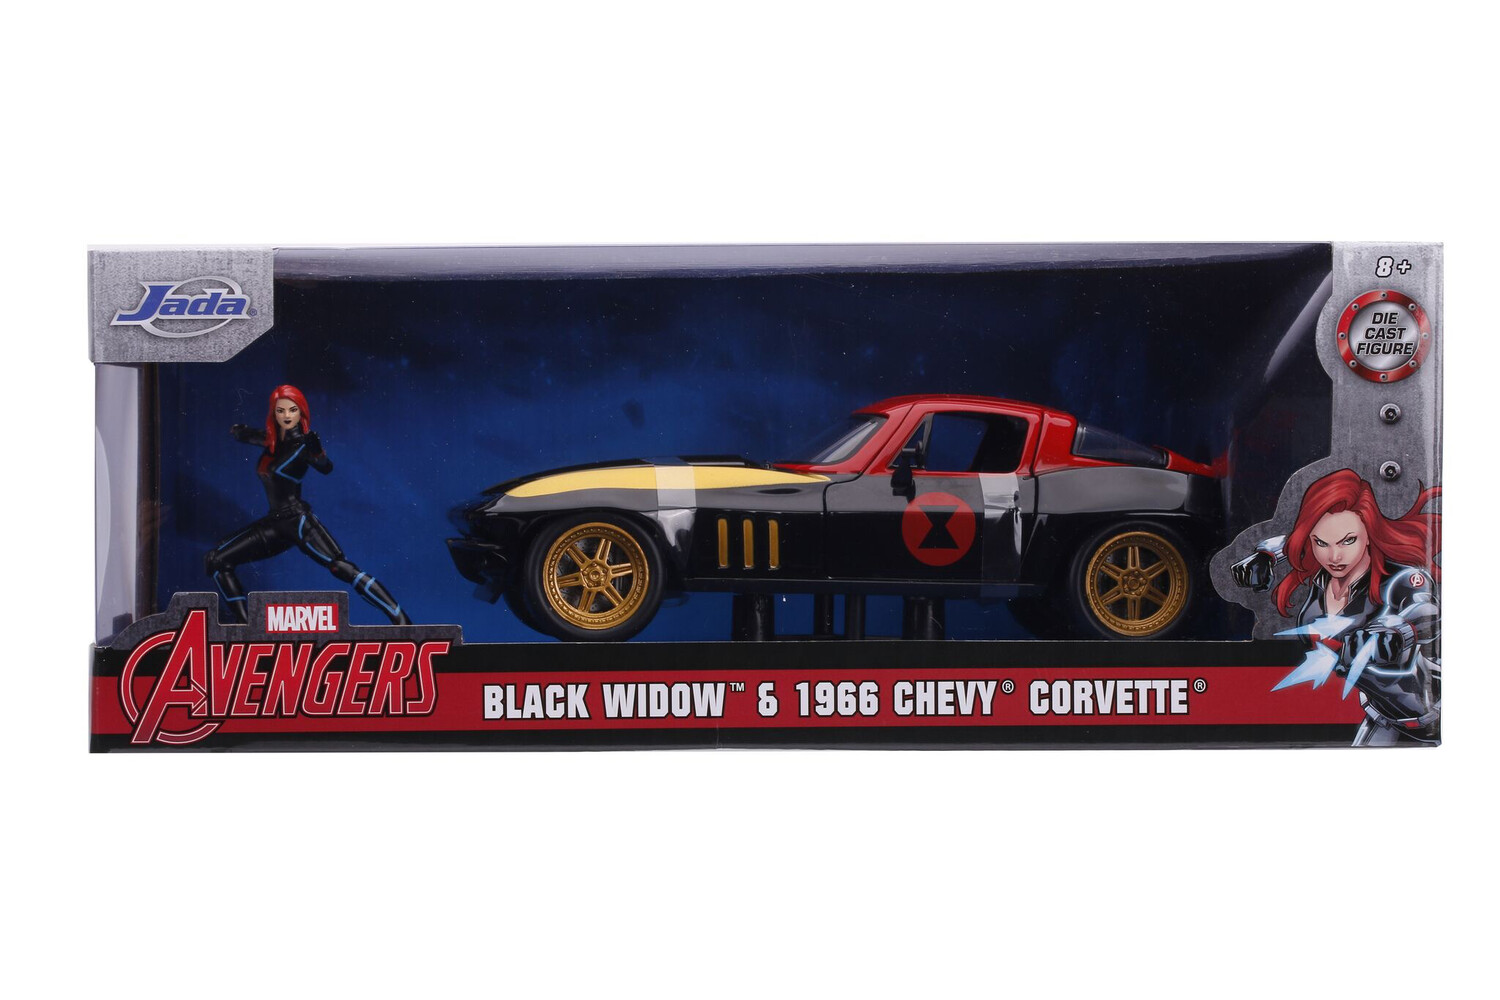 1966 Chevy Corvette black widow